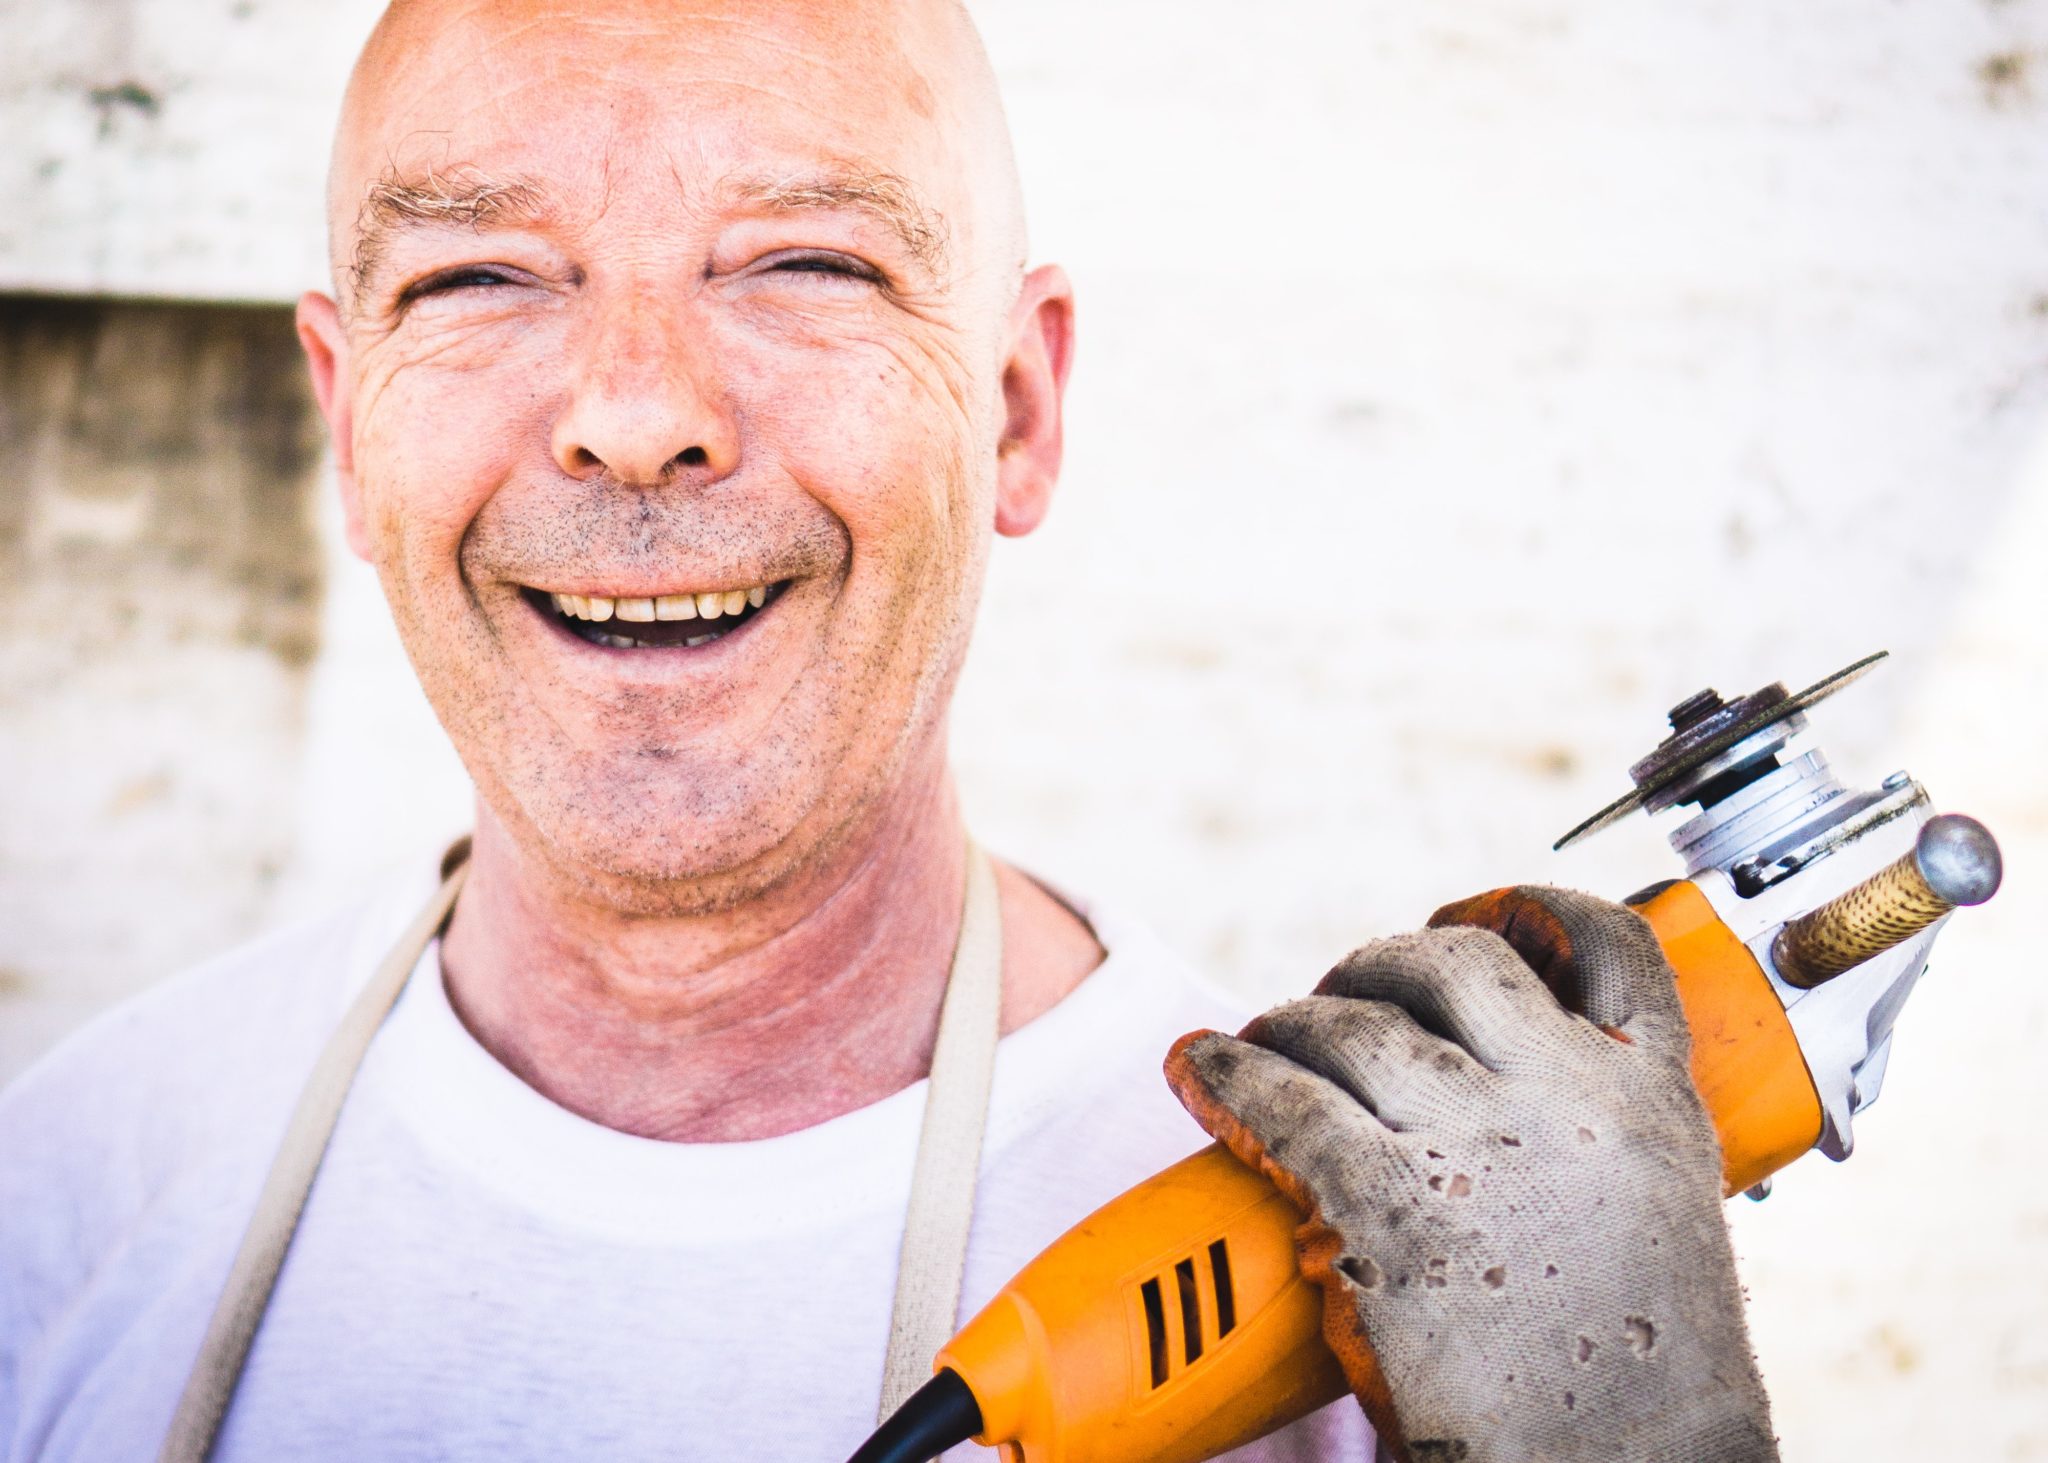 Handyman Services Near Me | Local Odd Job Man